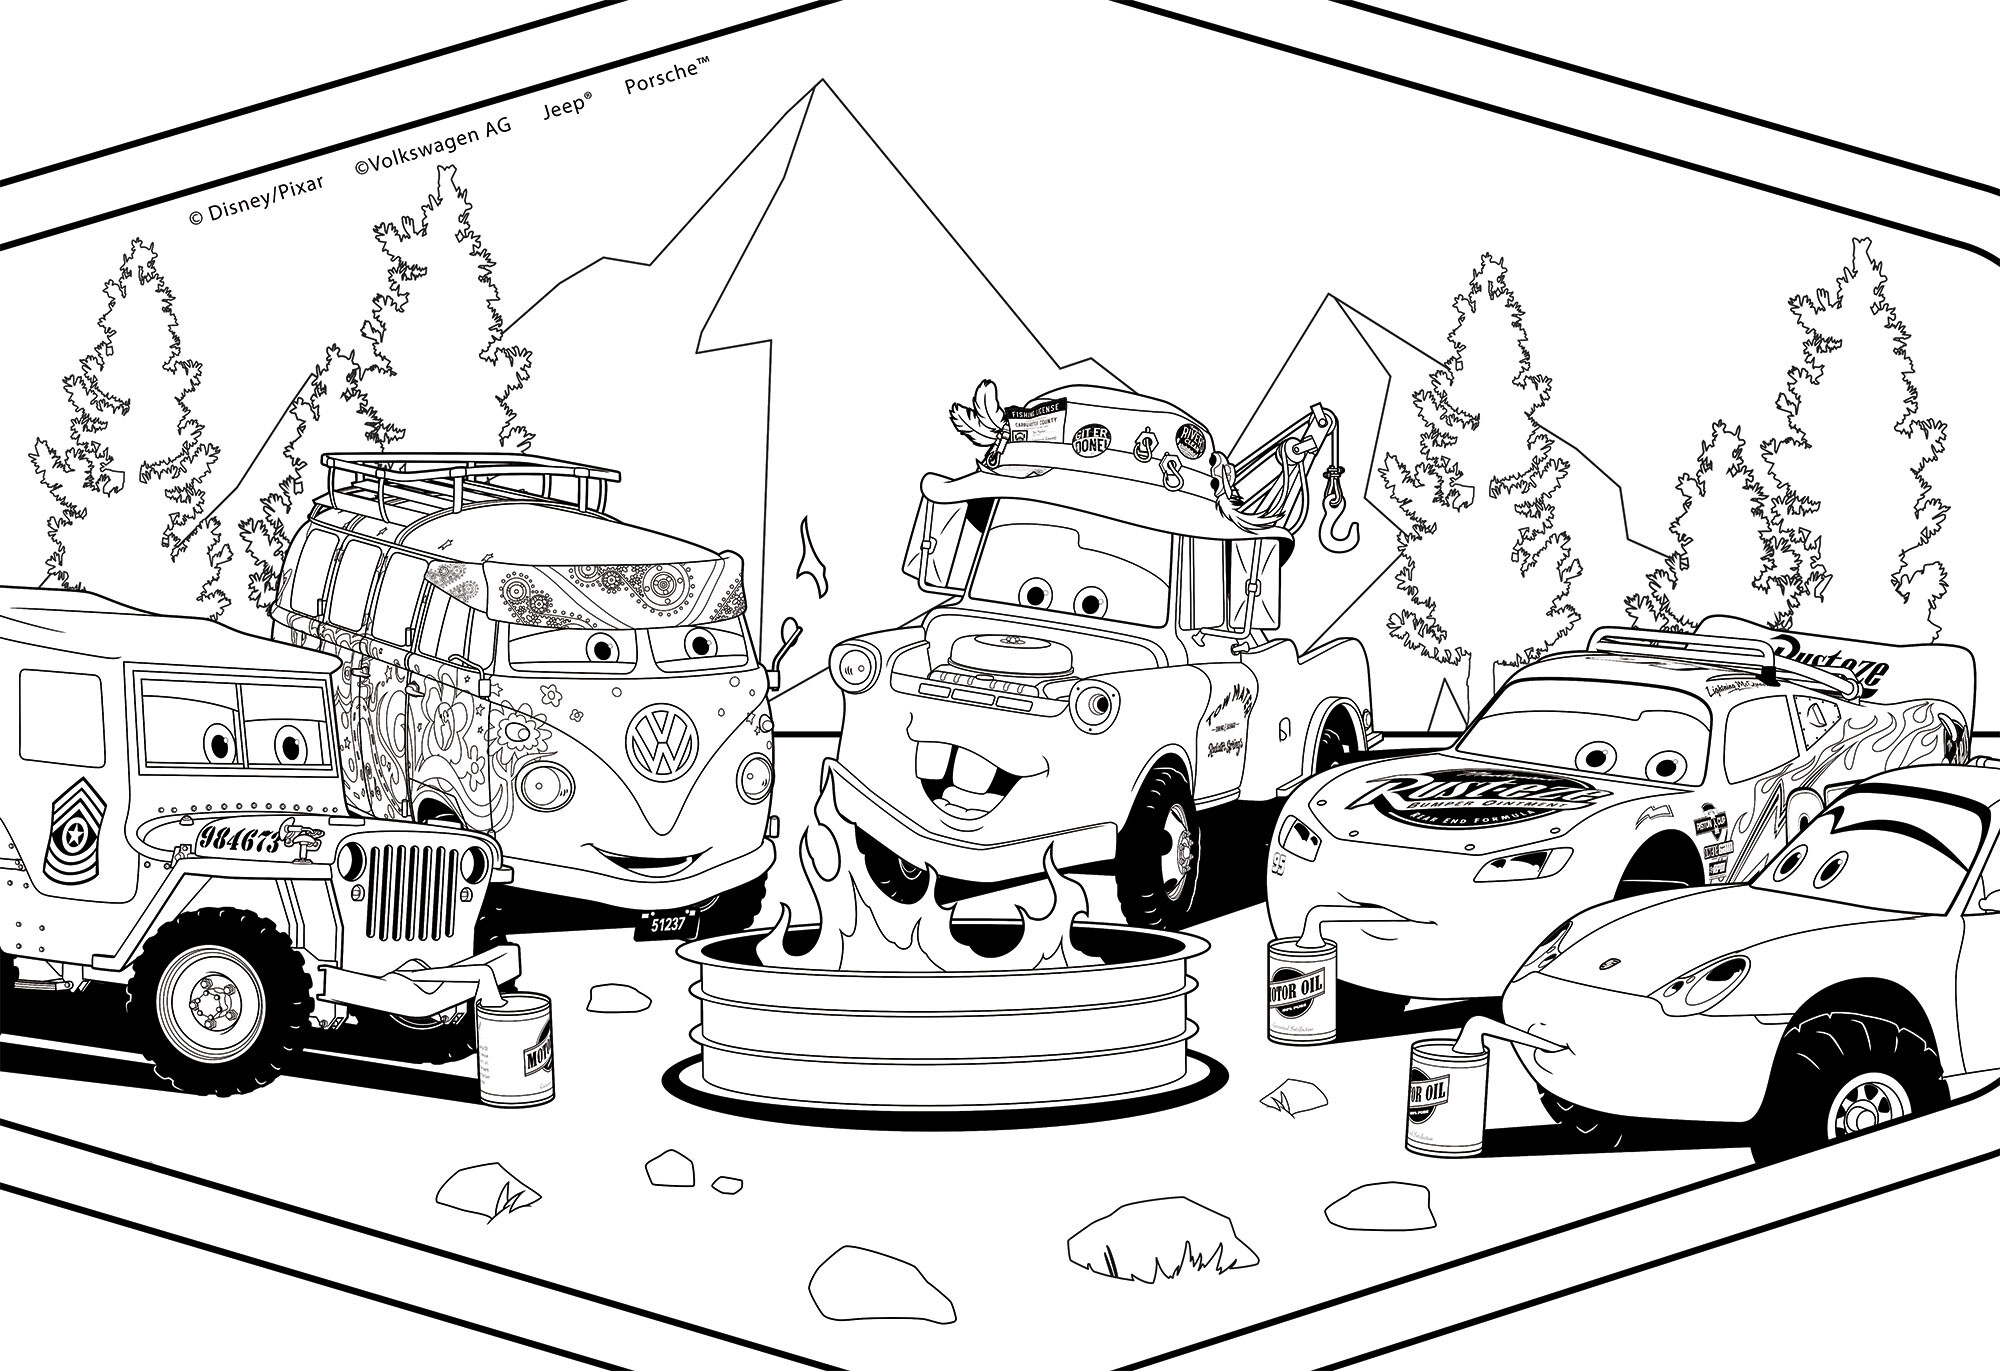 Disney eco-puzzle df cars 60 - LISCIANI, Cars